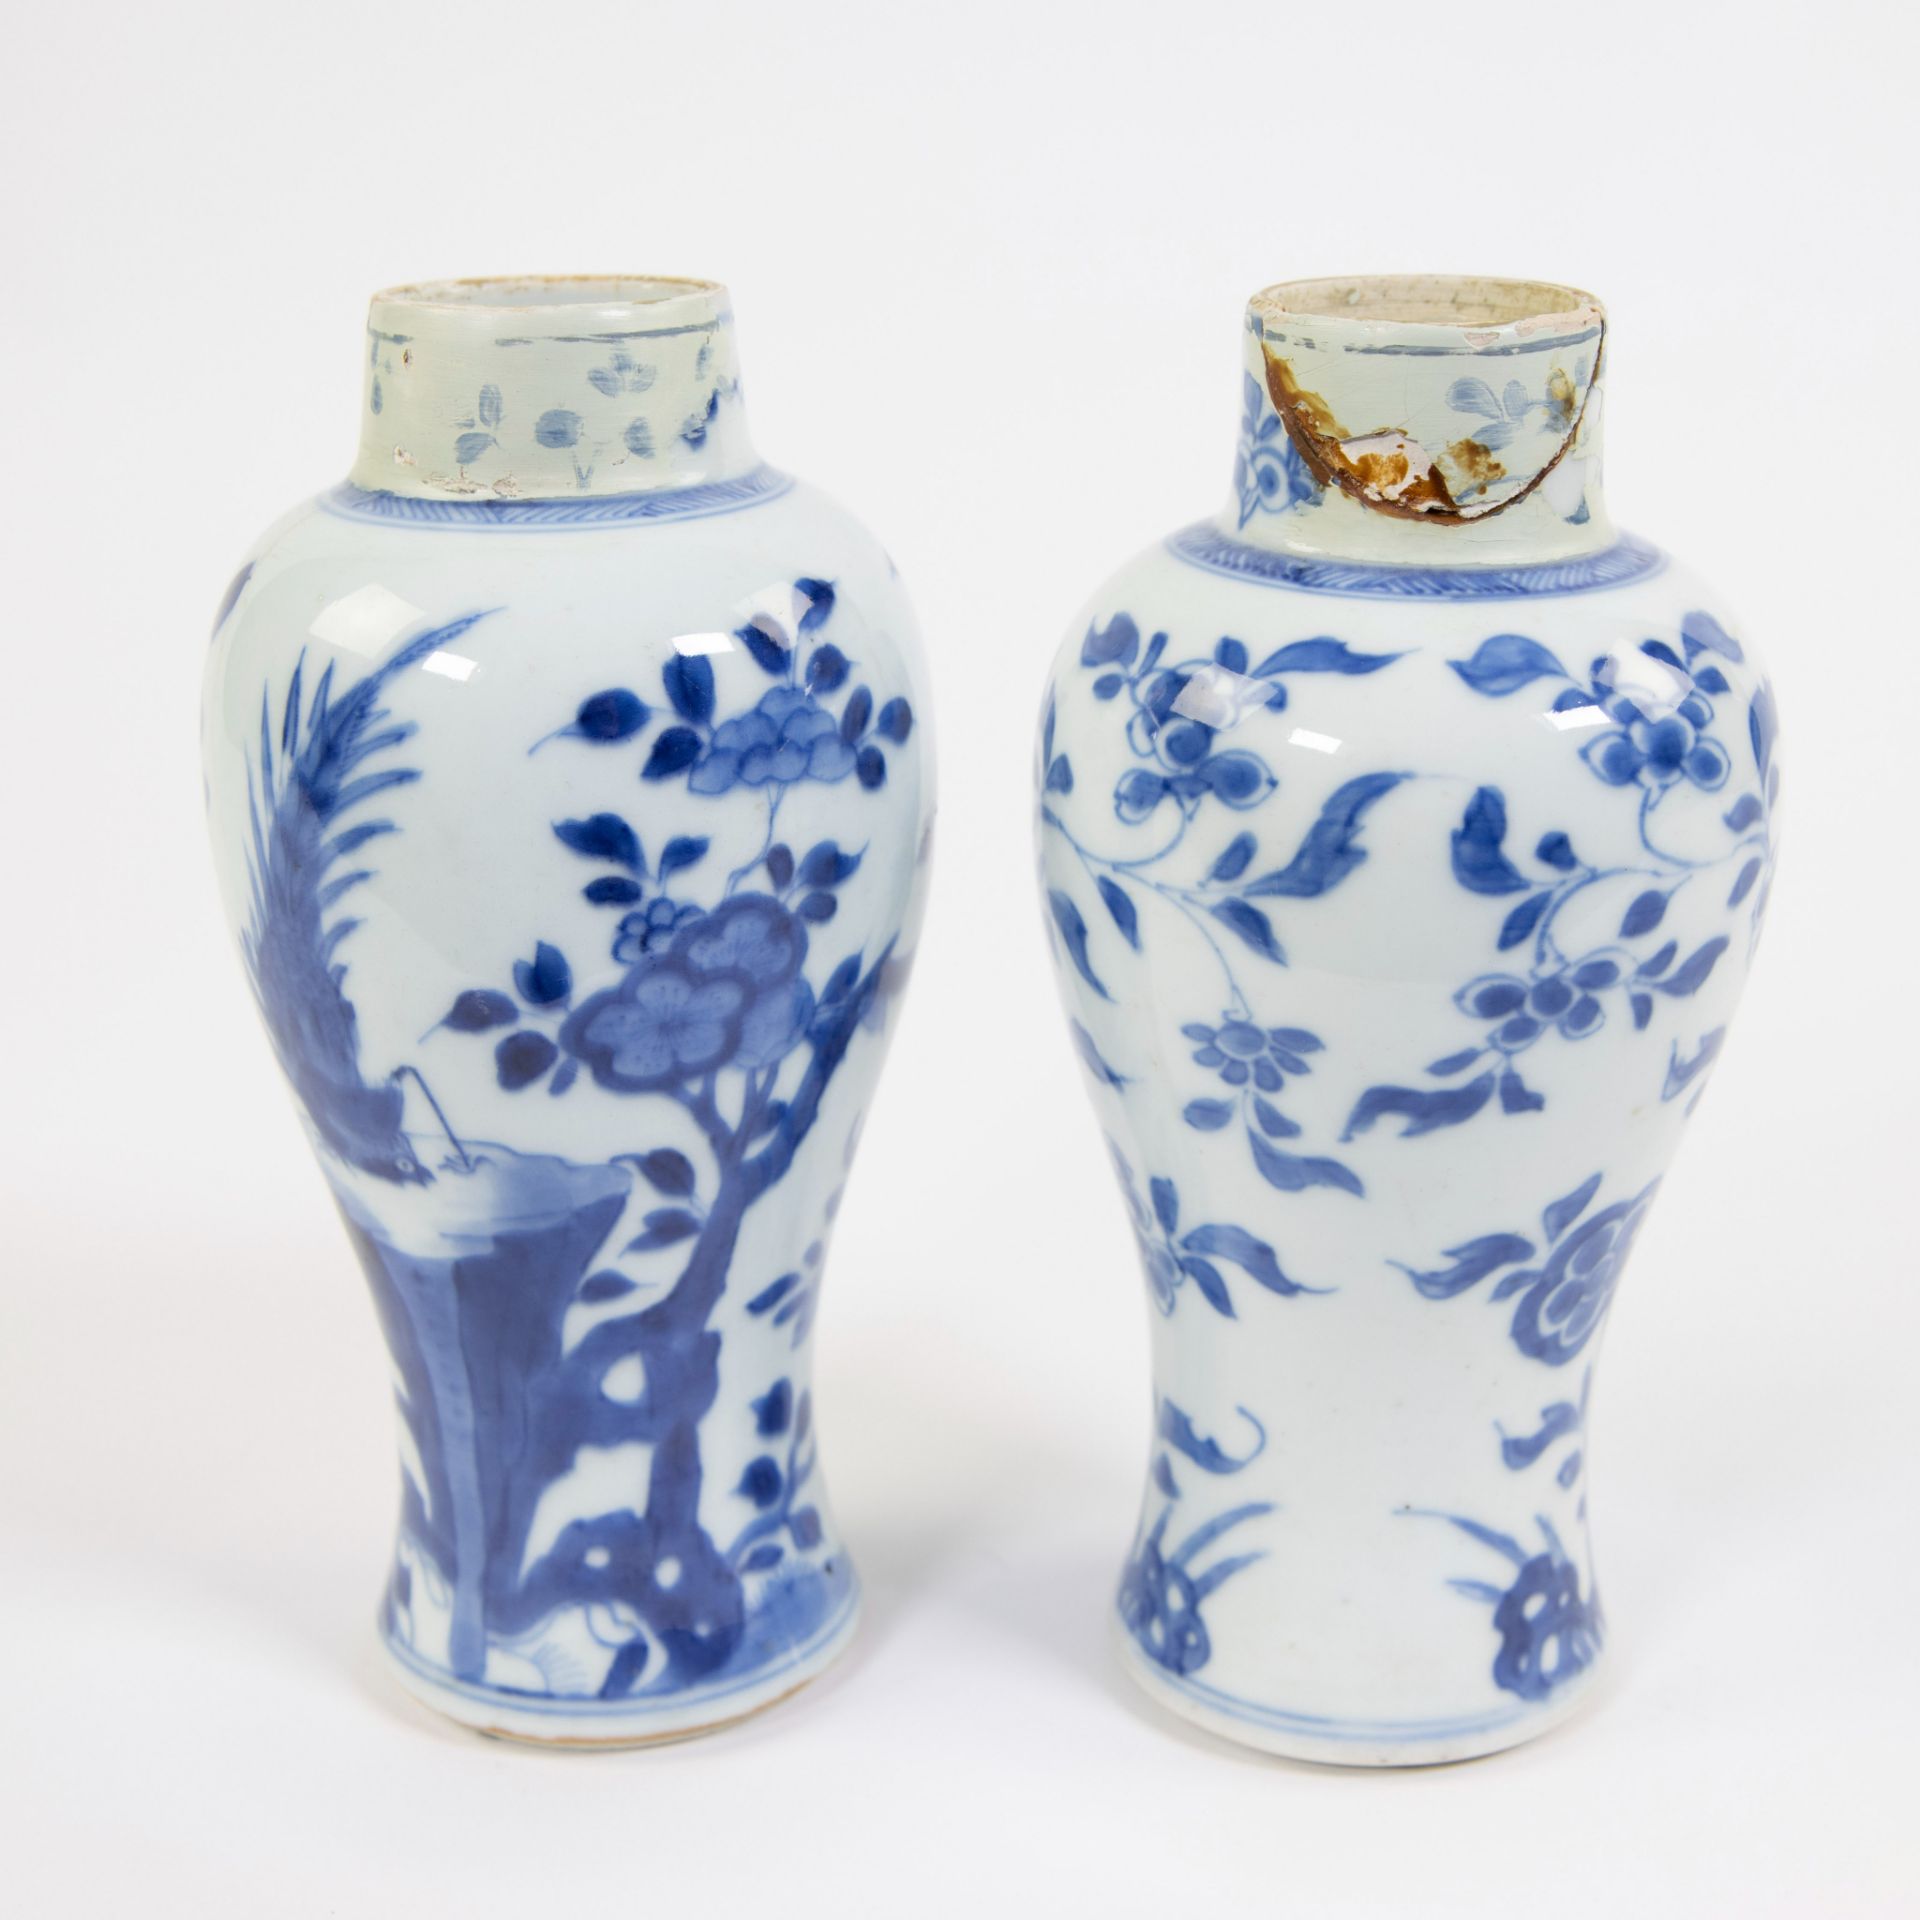 Two Kangxi porcelain vases, China, early 18th century - Image 2 of 6